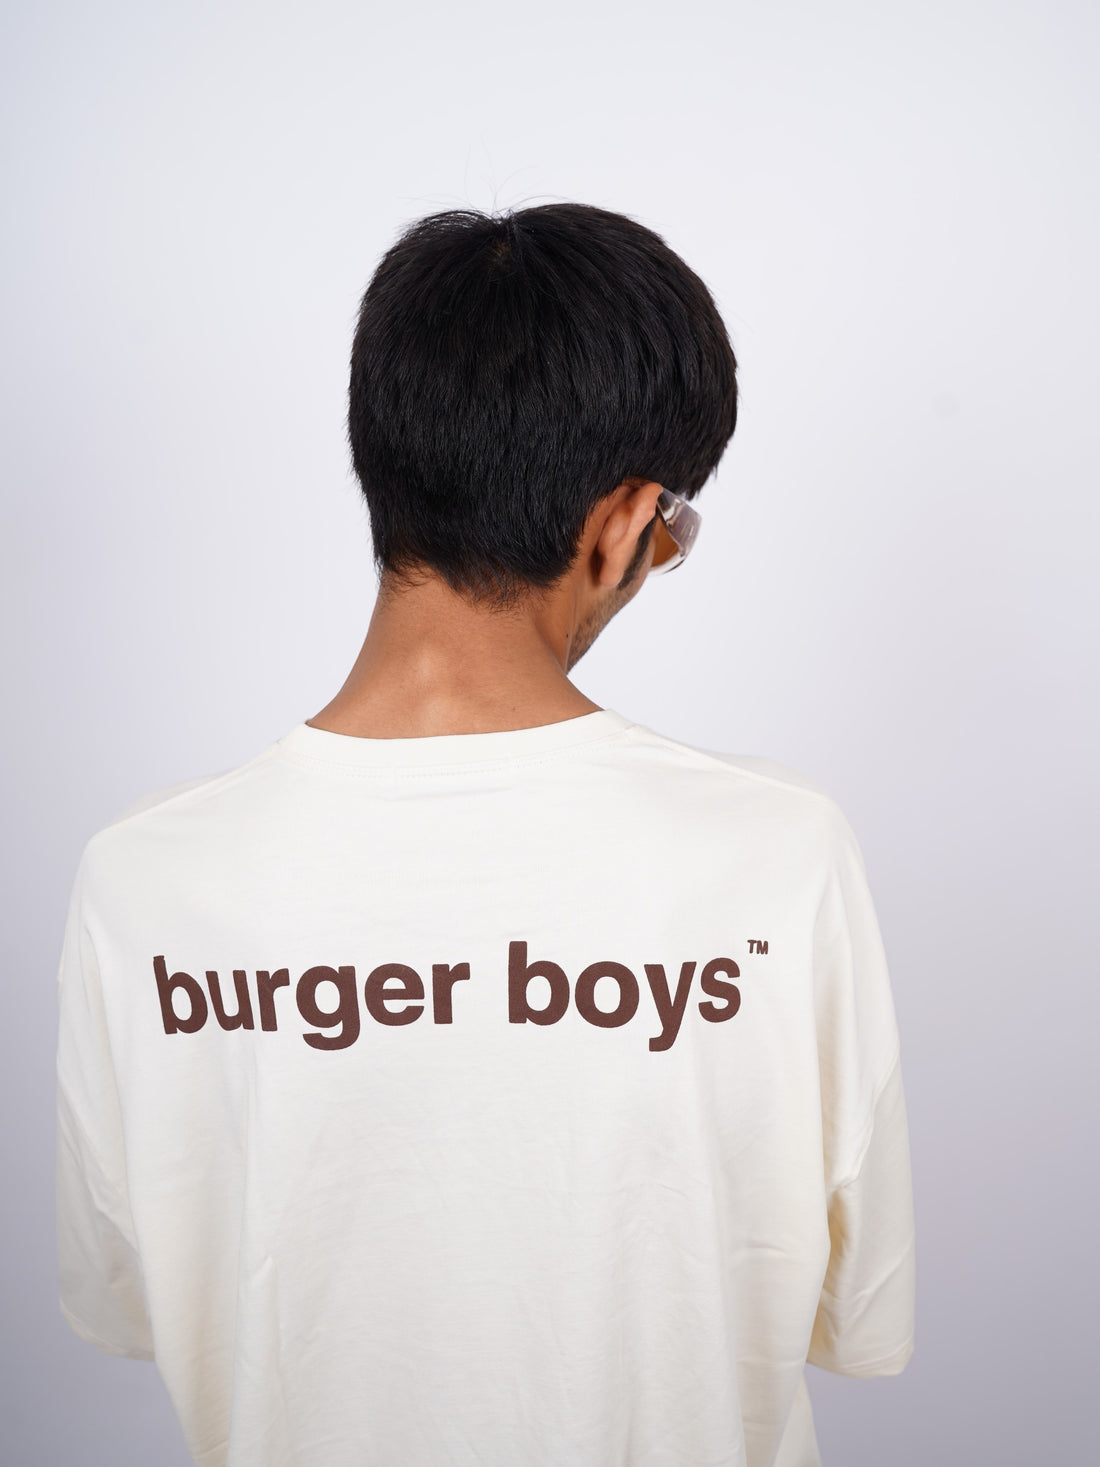 burger boys™ - SKELTON RIBS Tee